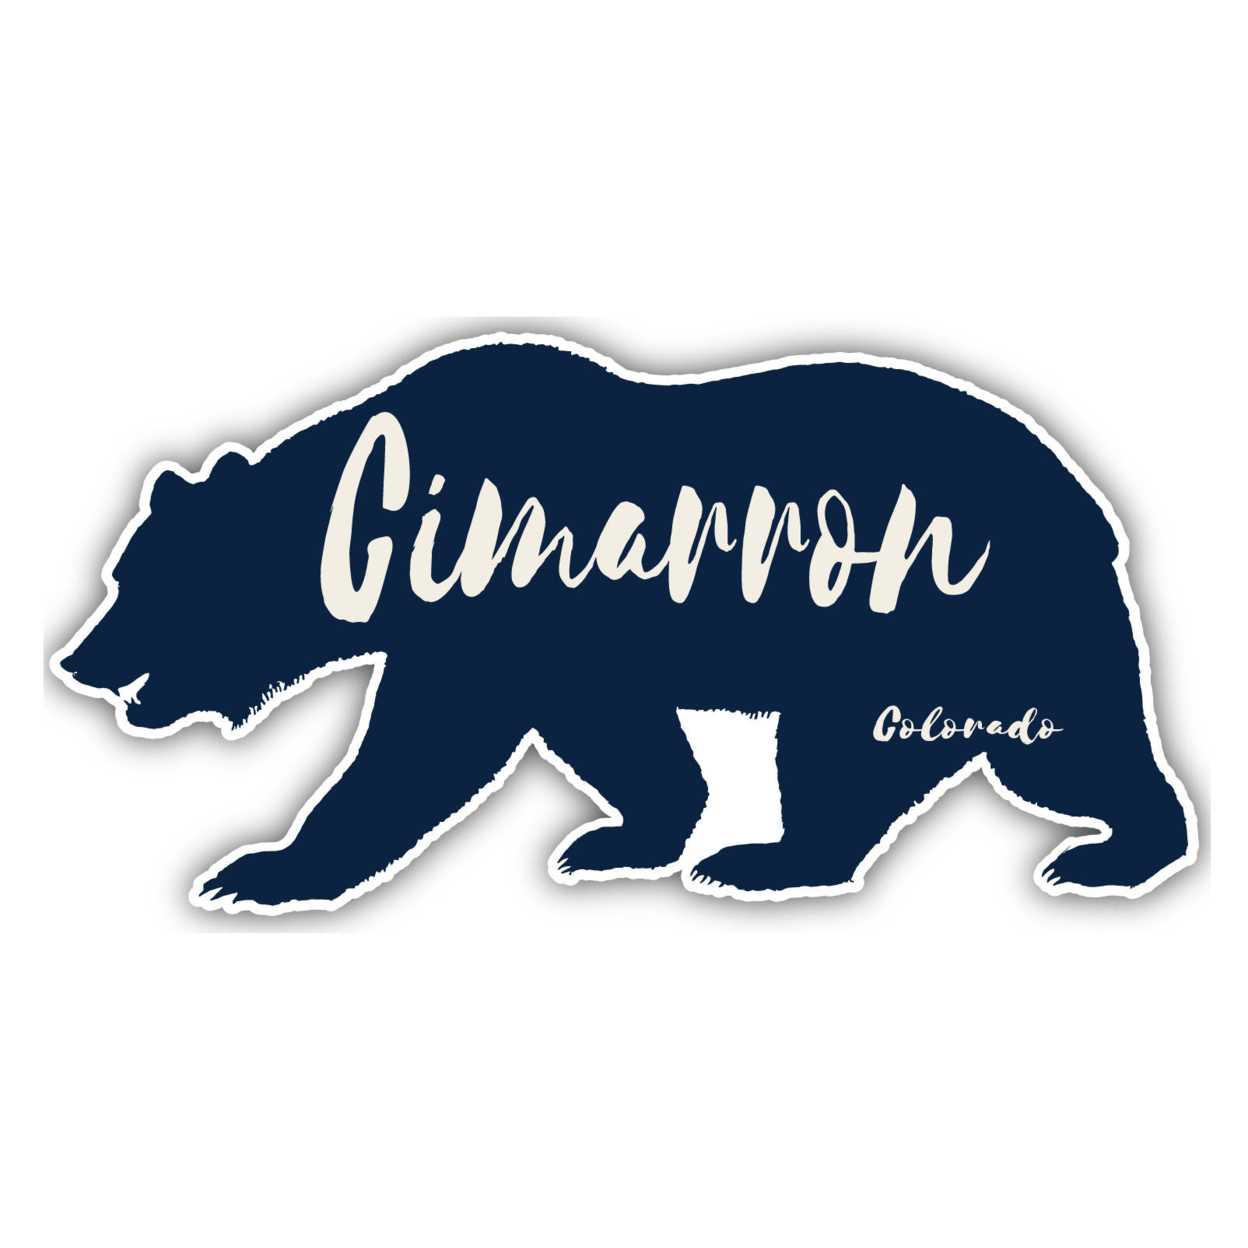 Cimarron Colorado Souvenir Decorative Stickers (Choose Theme And Size) - 4-Pack, 12-Inch, Bear